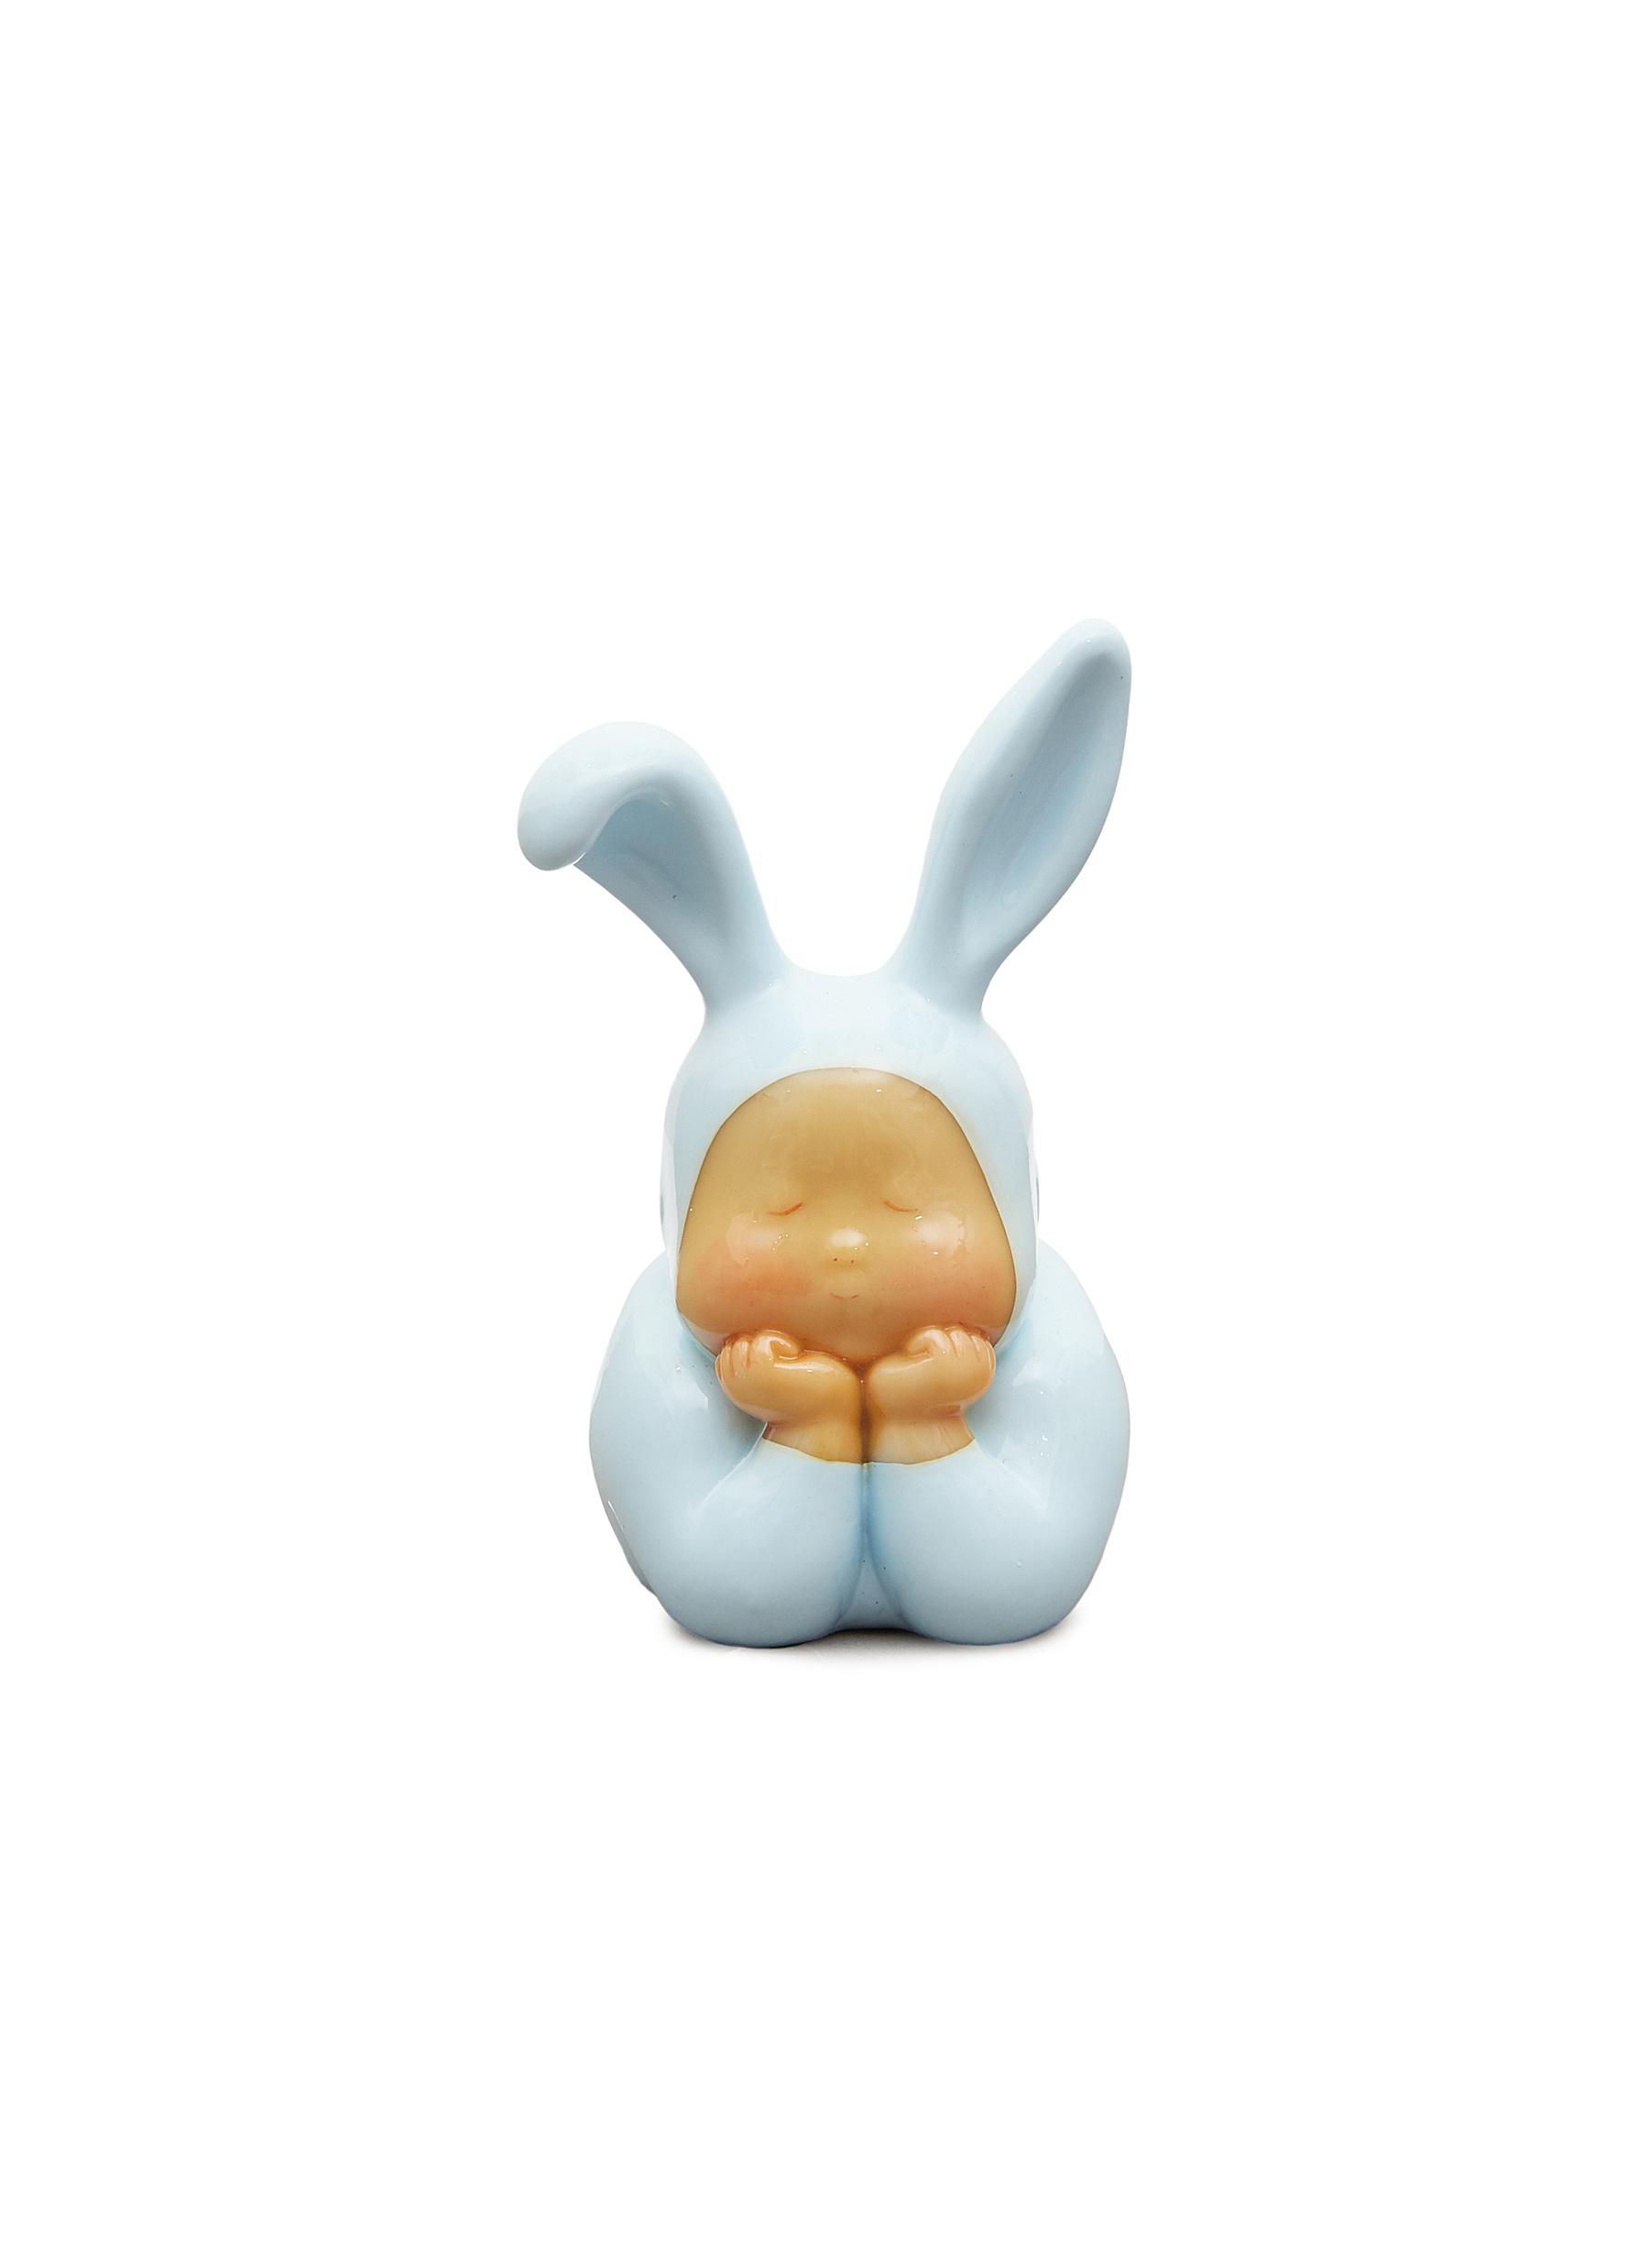 Baby Bunny mini sculpture